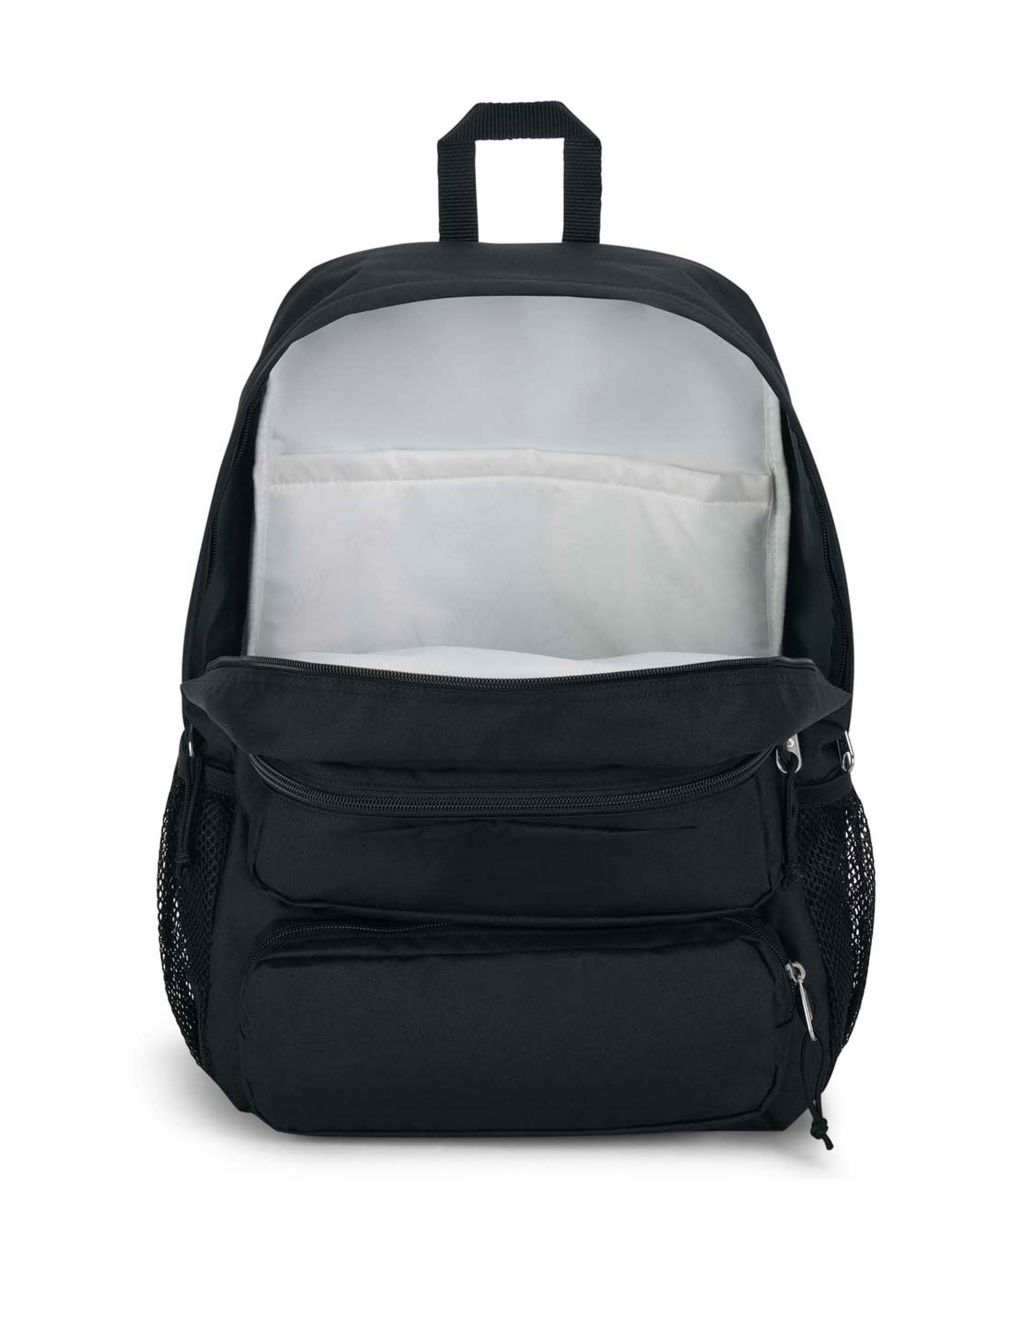 Doubleton Multi Pocket Backpack 7 of 8